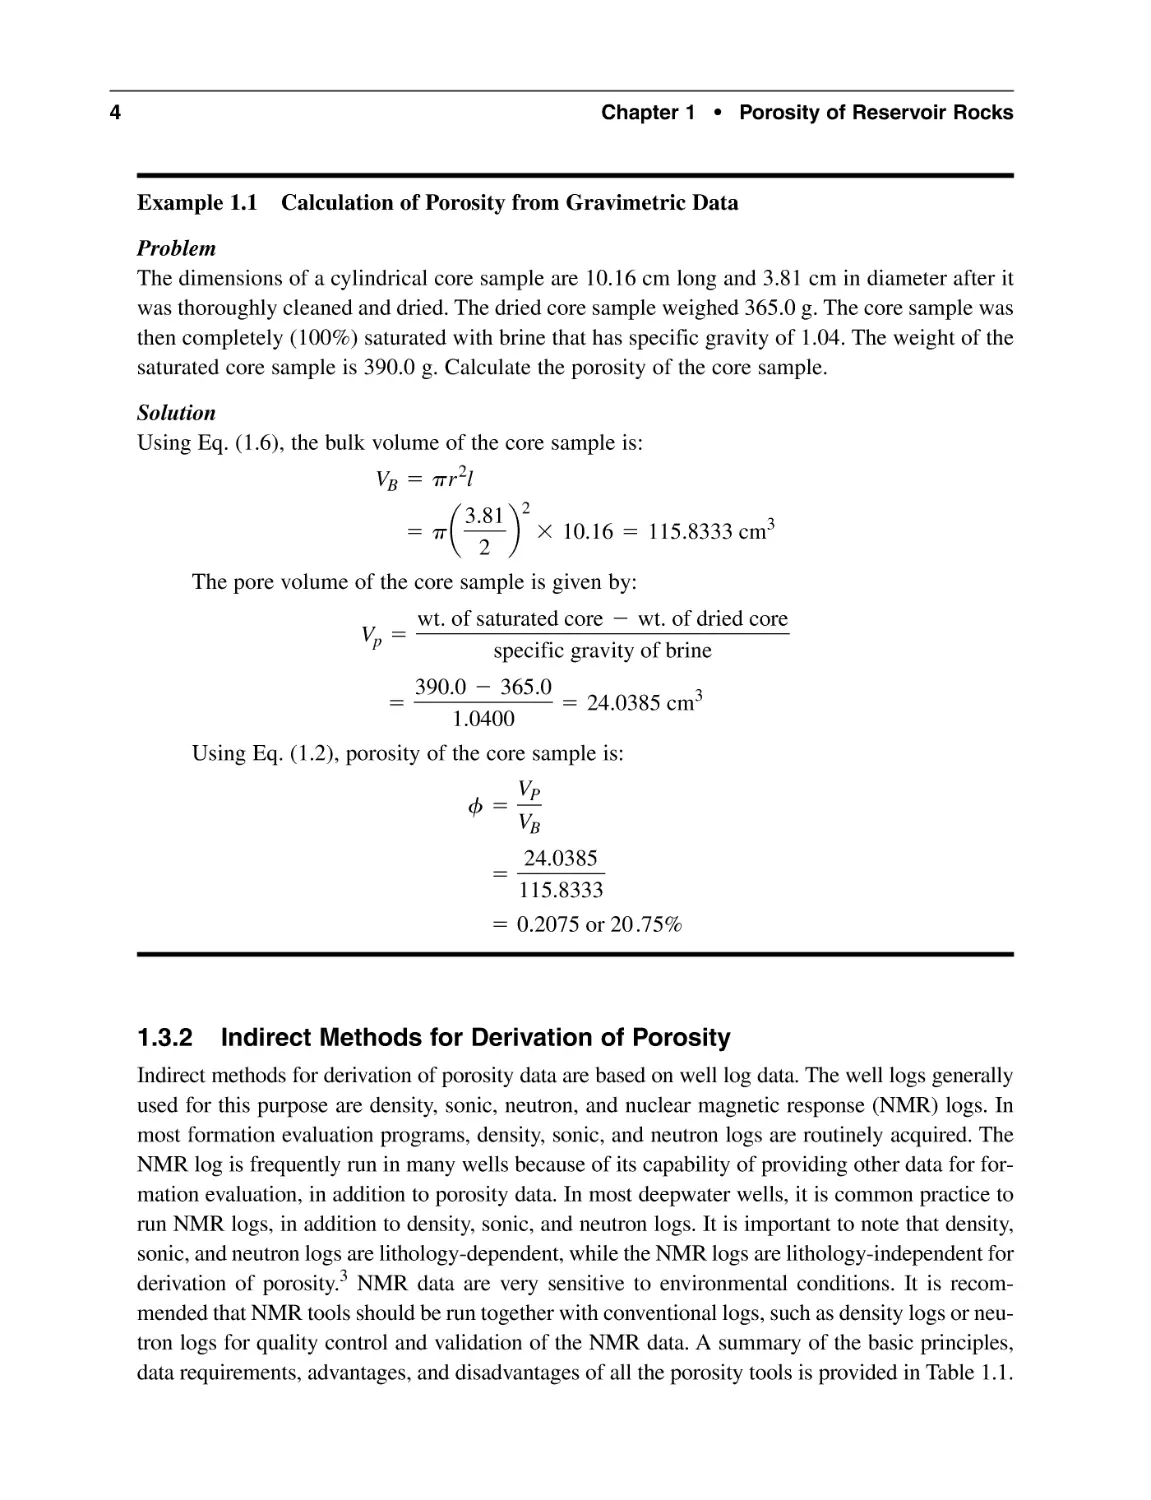 1.3.2 Indirect Methods for Derivation of Porosity